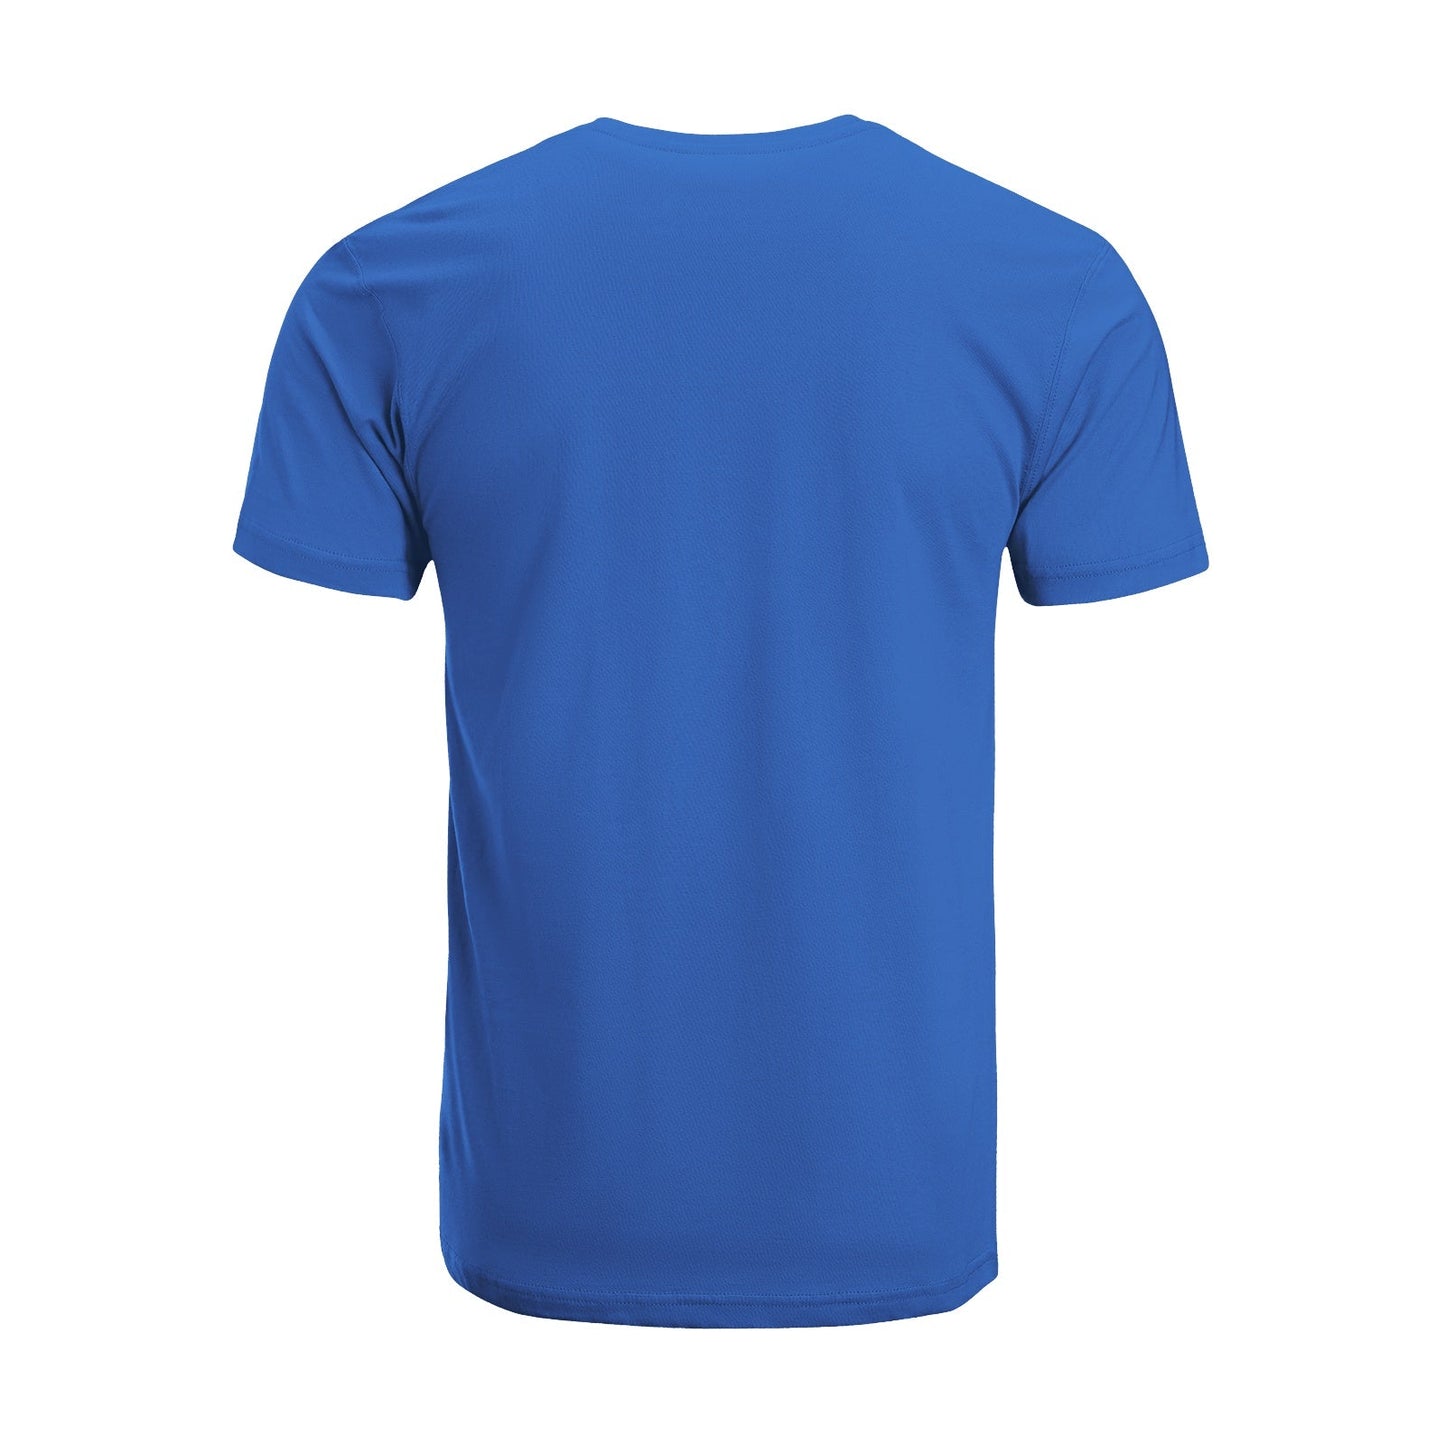 Unisex Short Sleeve Crew Neck Cotton Jersey T-Shirt USA 24